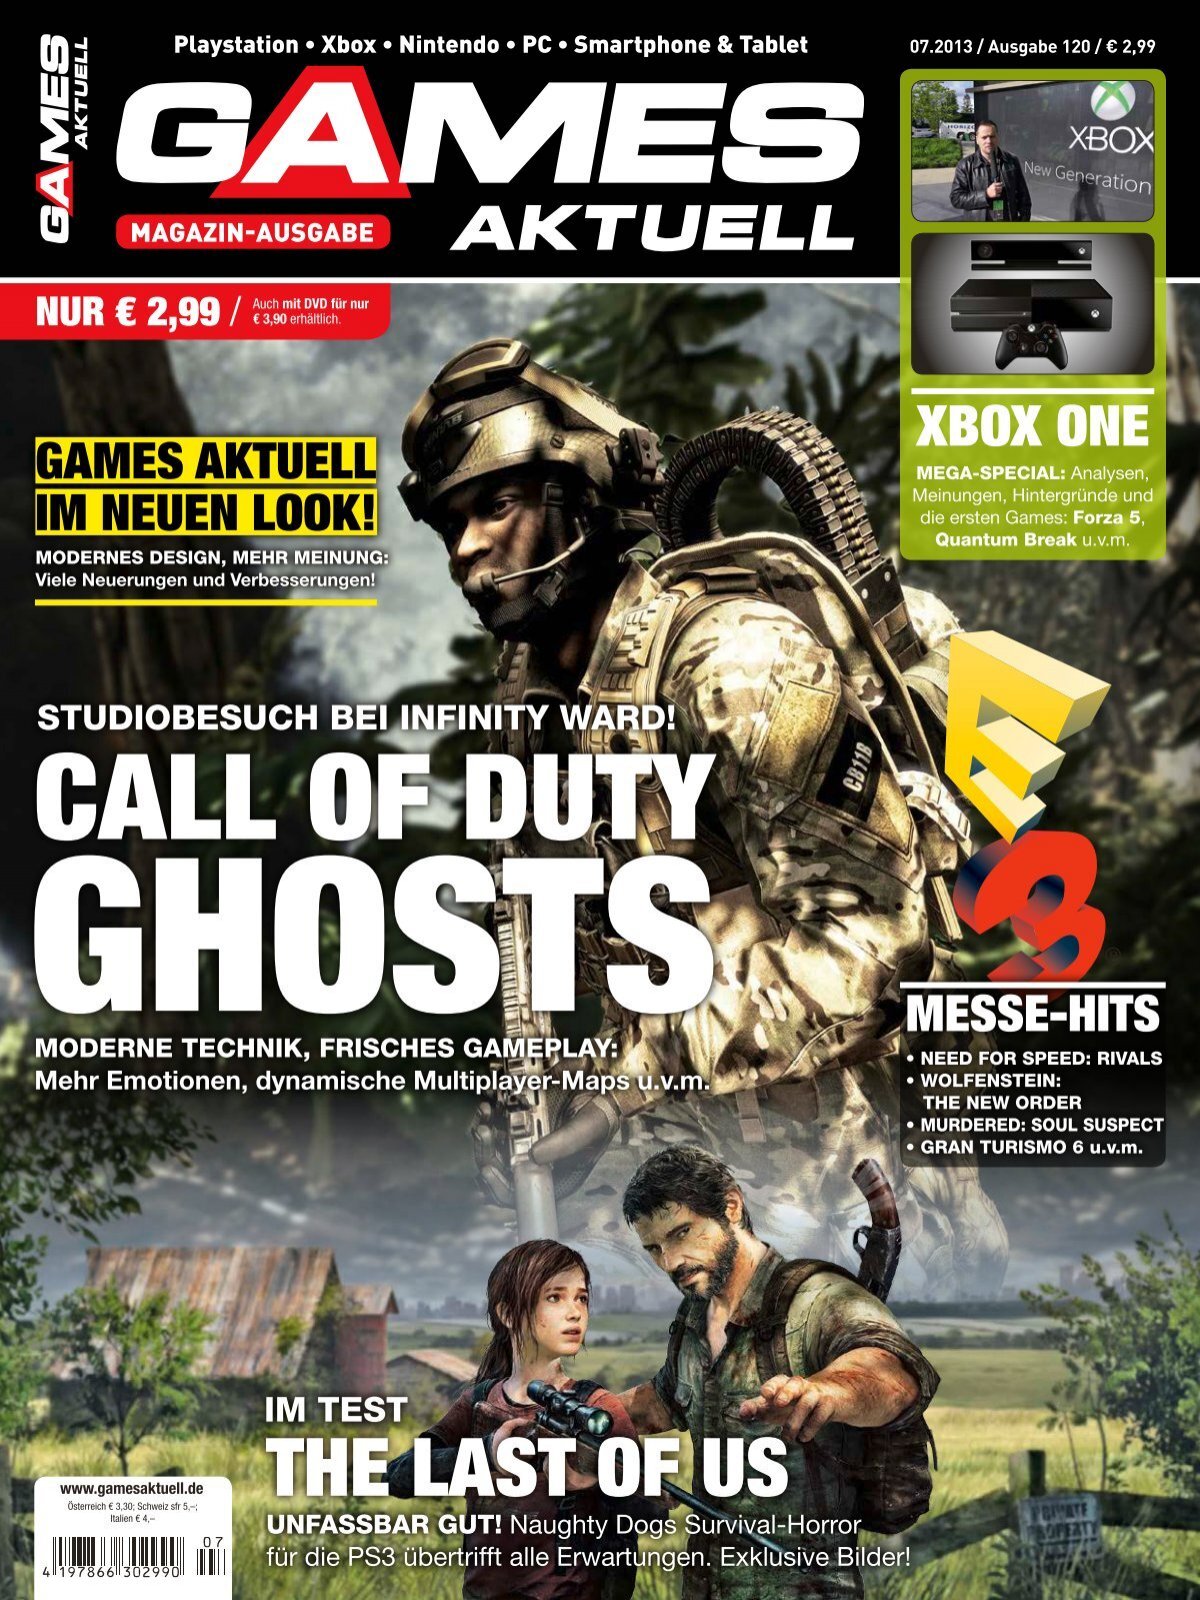 Games Aktuell Magazin Call of duty Ghosts (Vorschau)